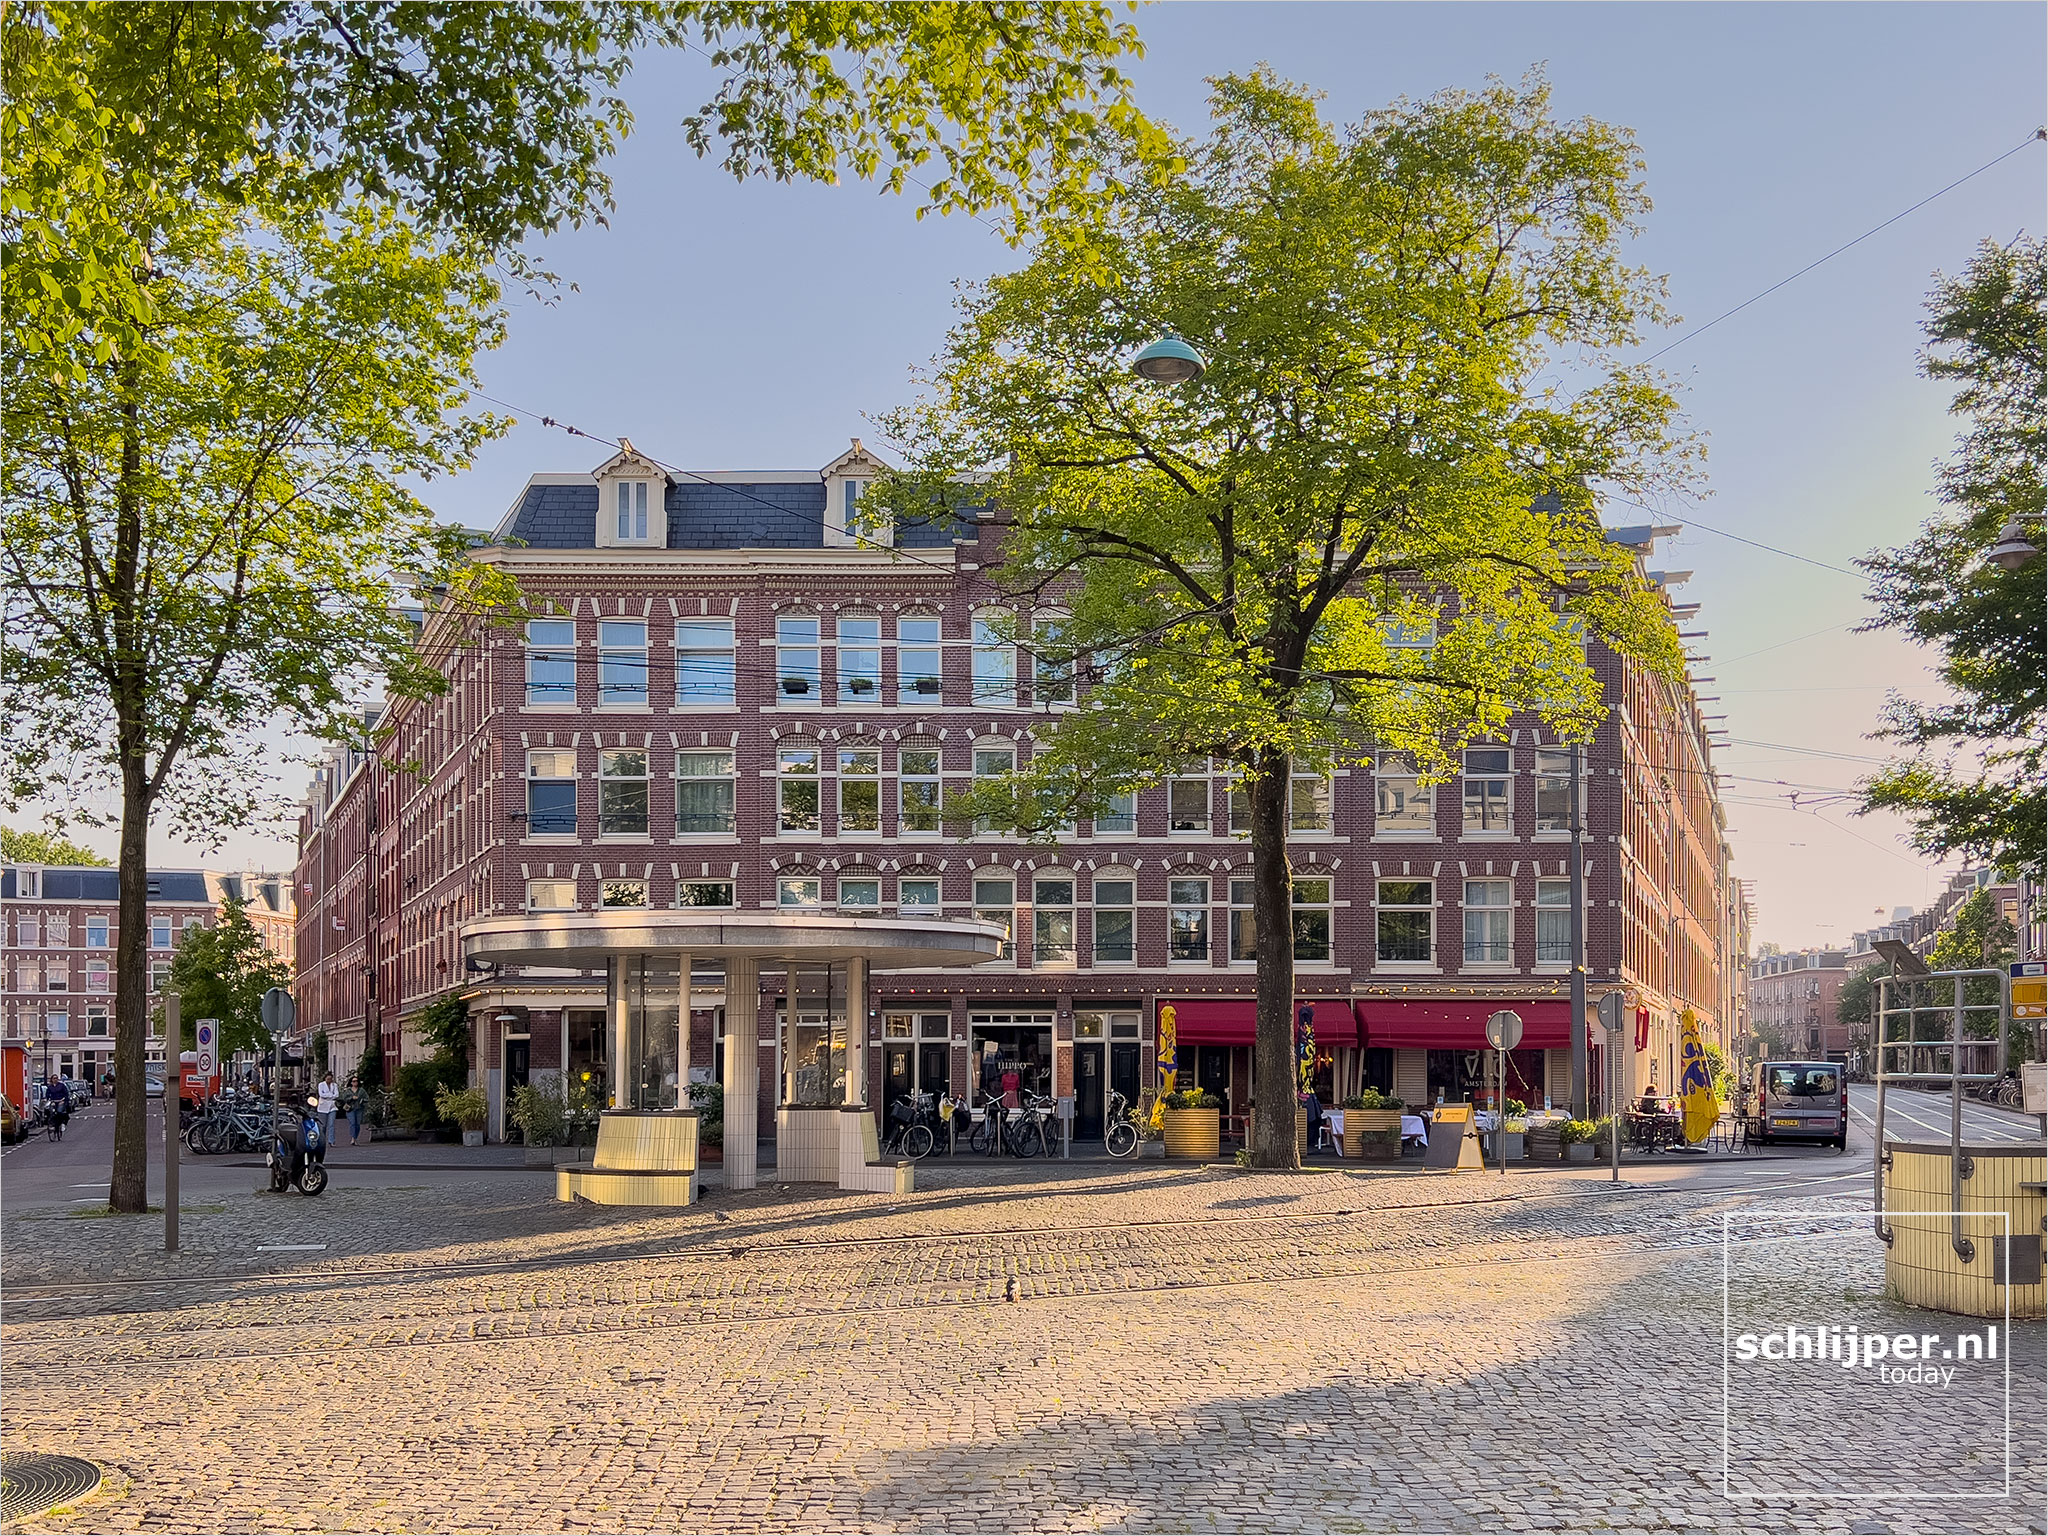 The Netherlands, Amsterdam, 4 juni 2022